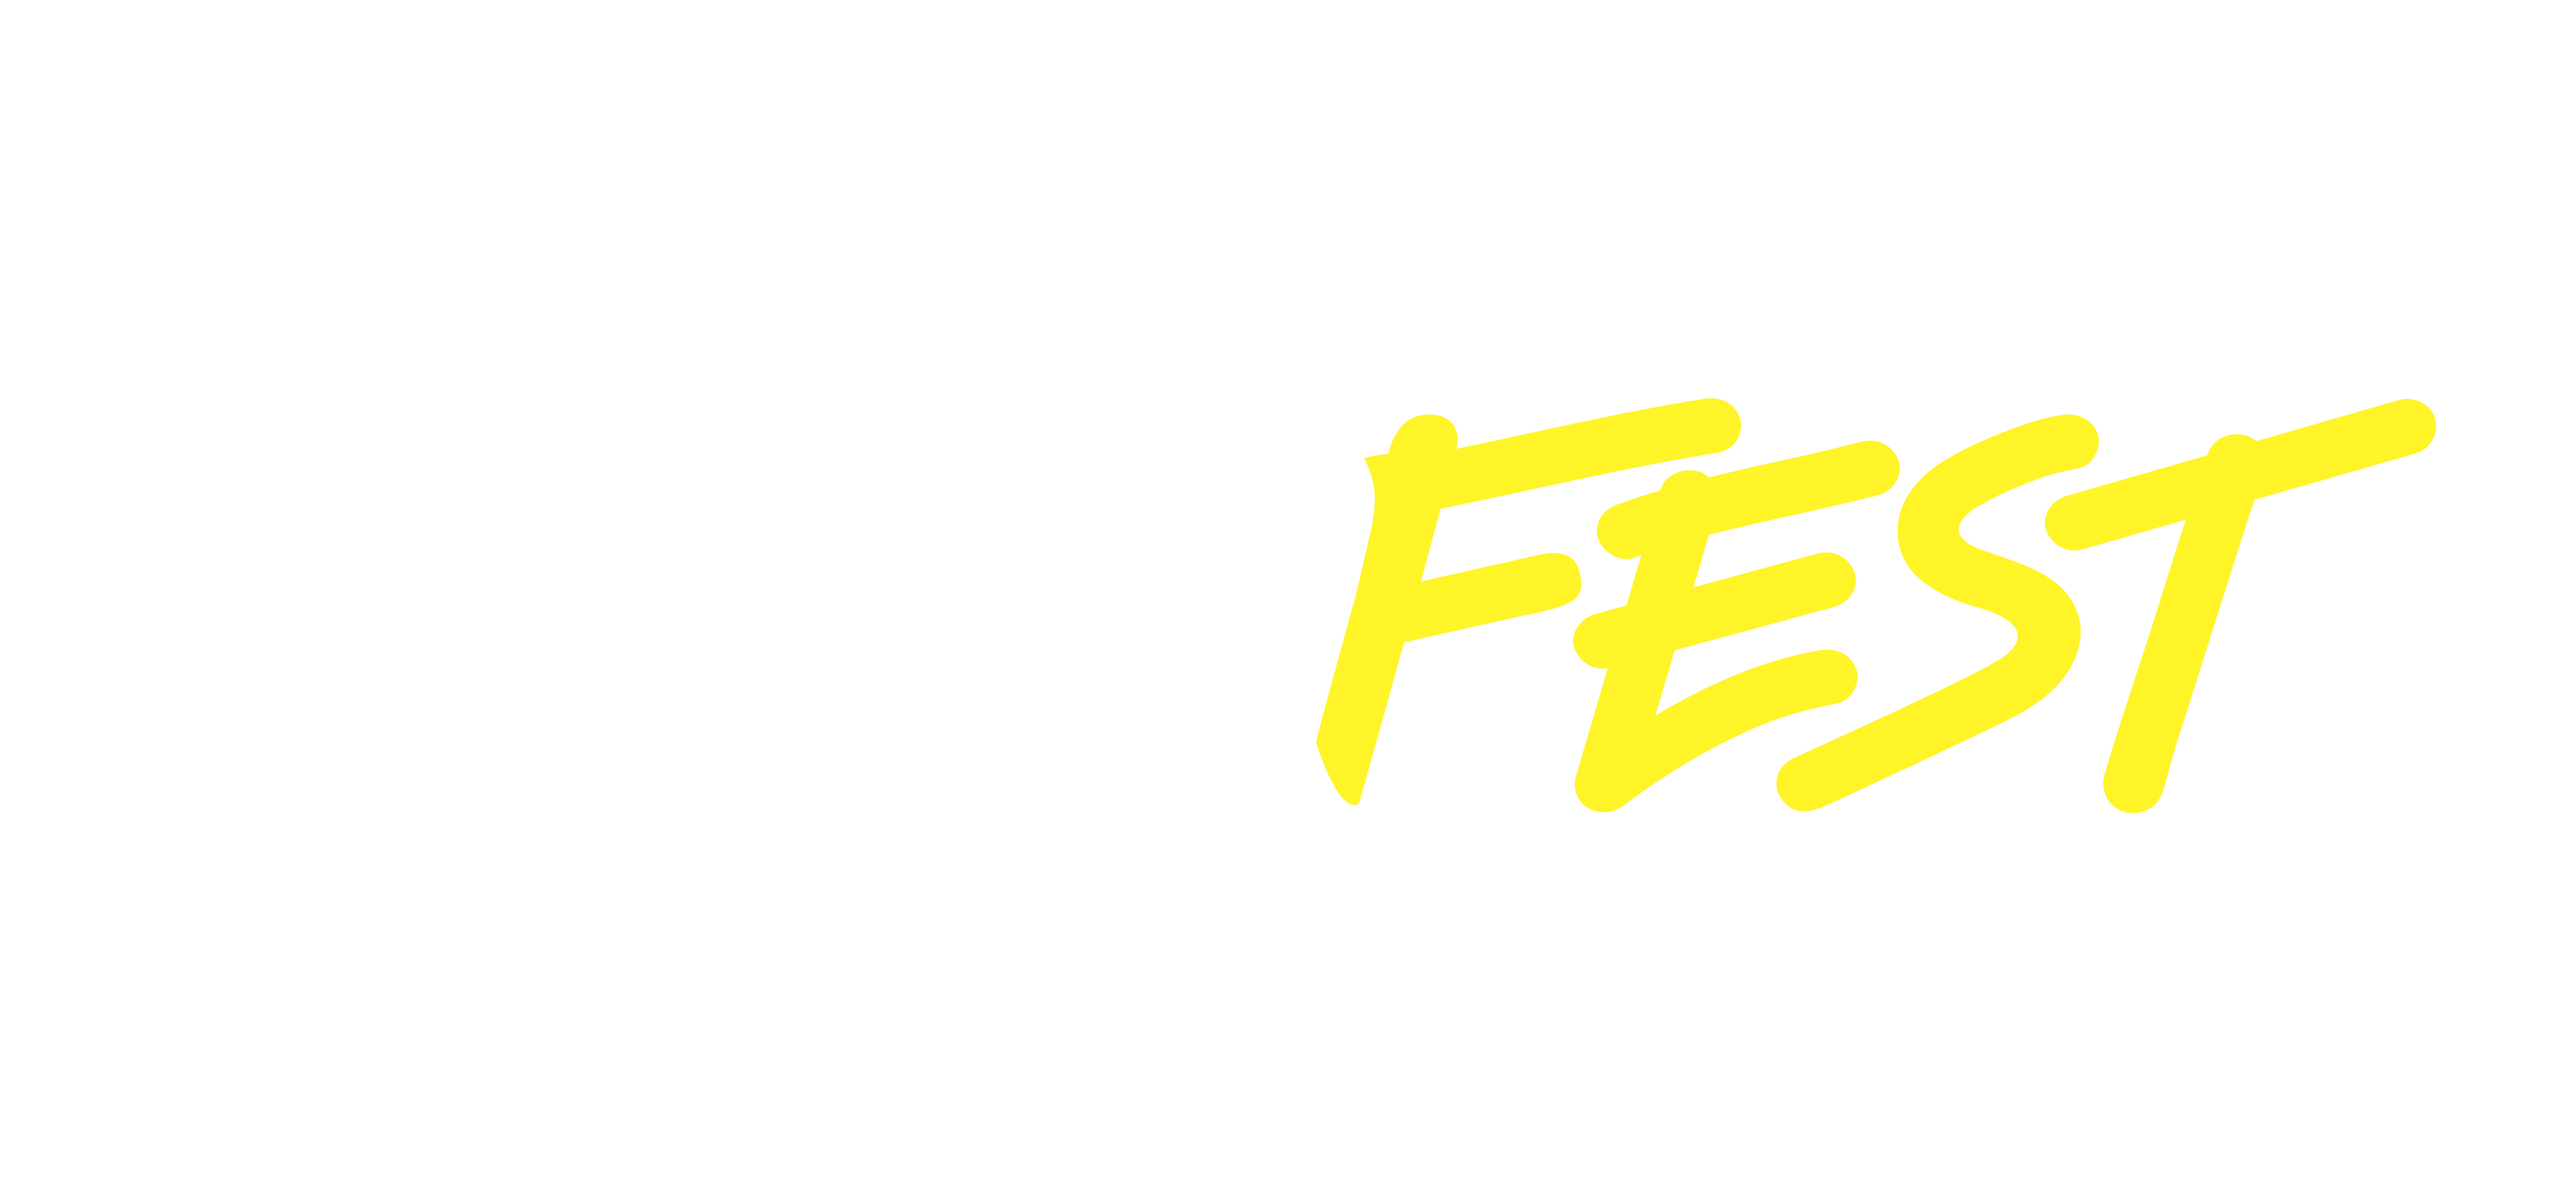 Is The Crew Motorfest 1 1 scale?